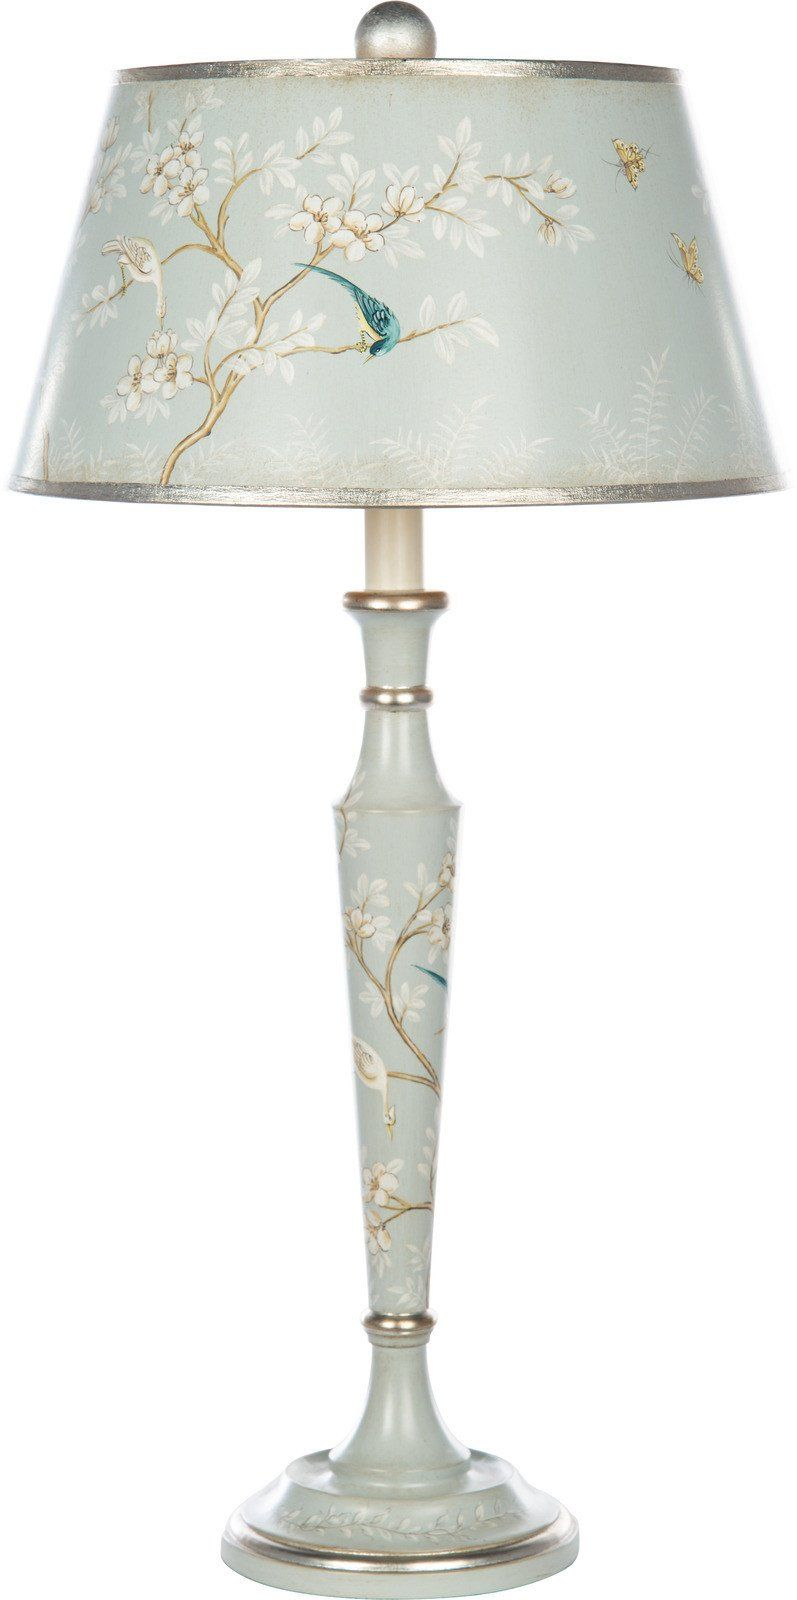 Bradburn Home Blue Garden Table Lamp With Flowers And Birds regarding sizing 797 X 1600